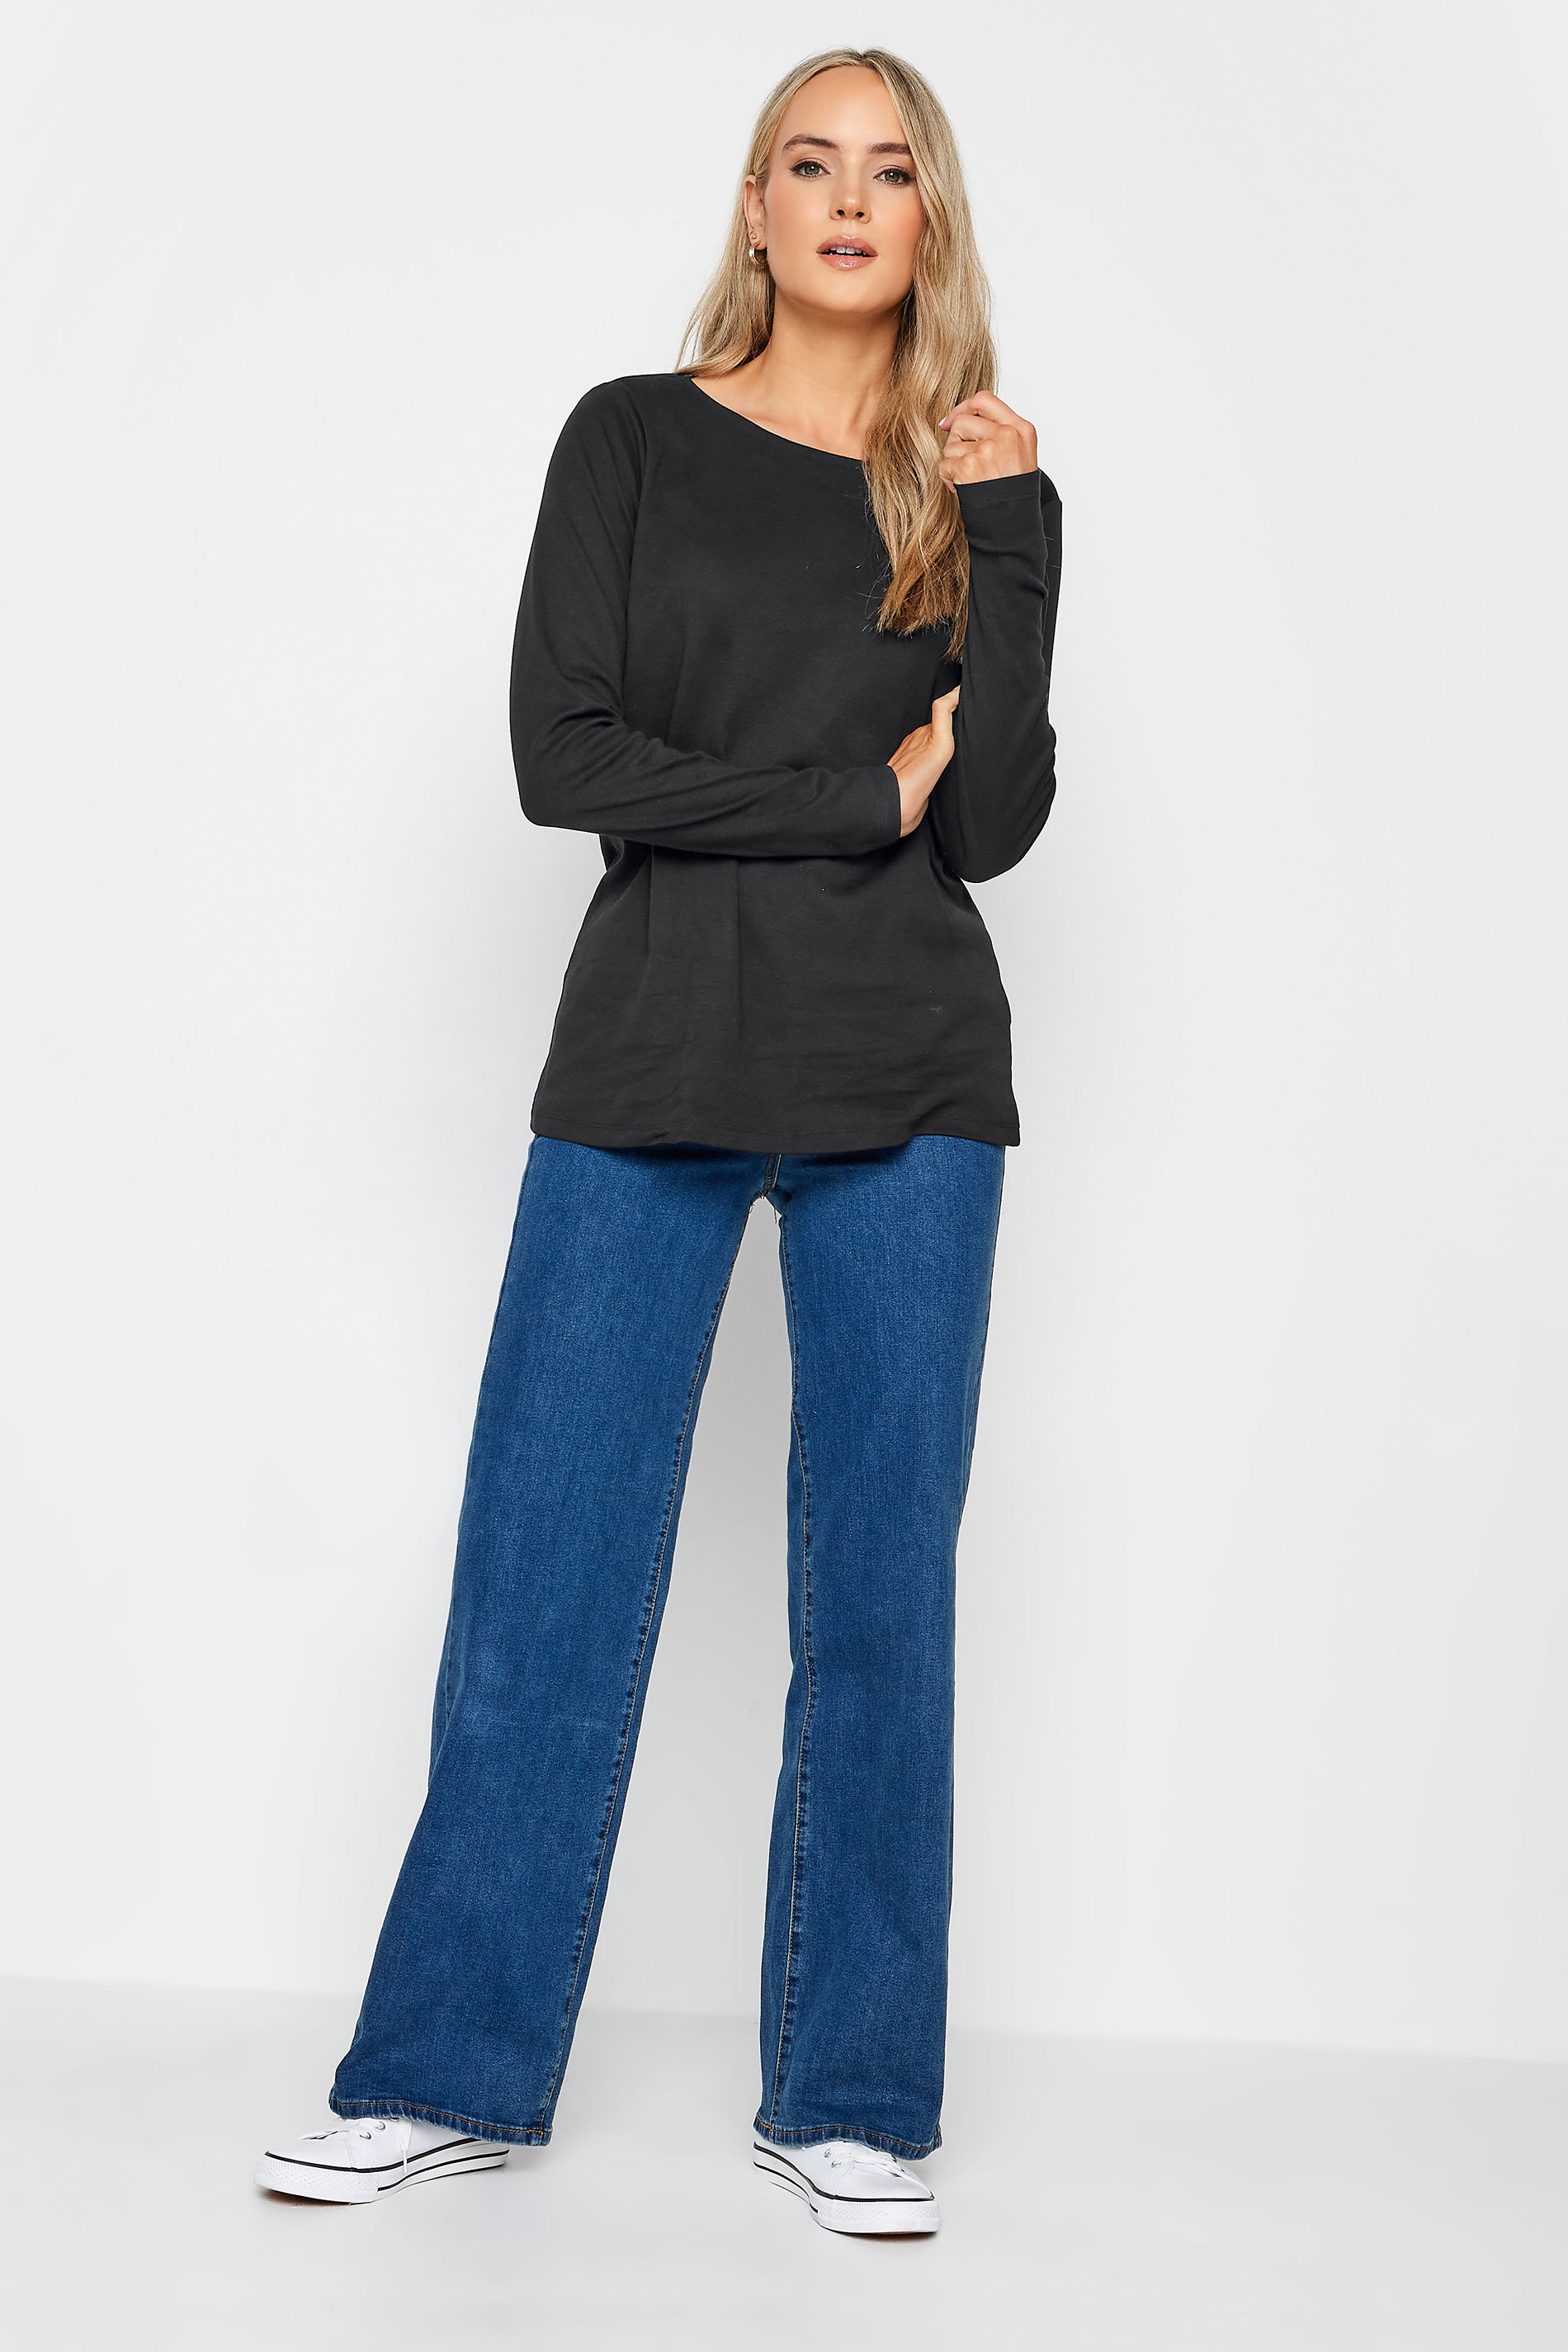 LTS Tall Womens 3 PACK Black & White Long Sleeve Cotton T-Shirt | Long Tall Sally  3